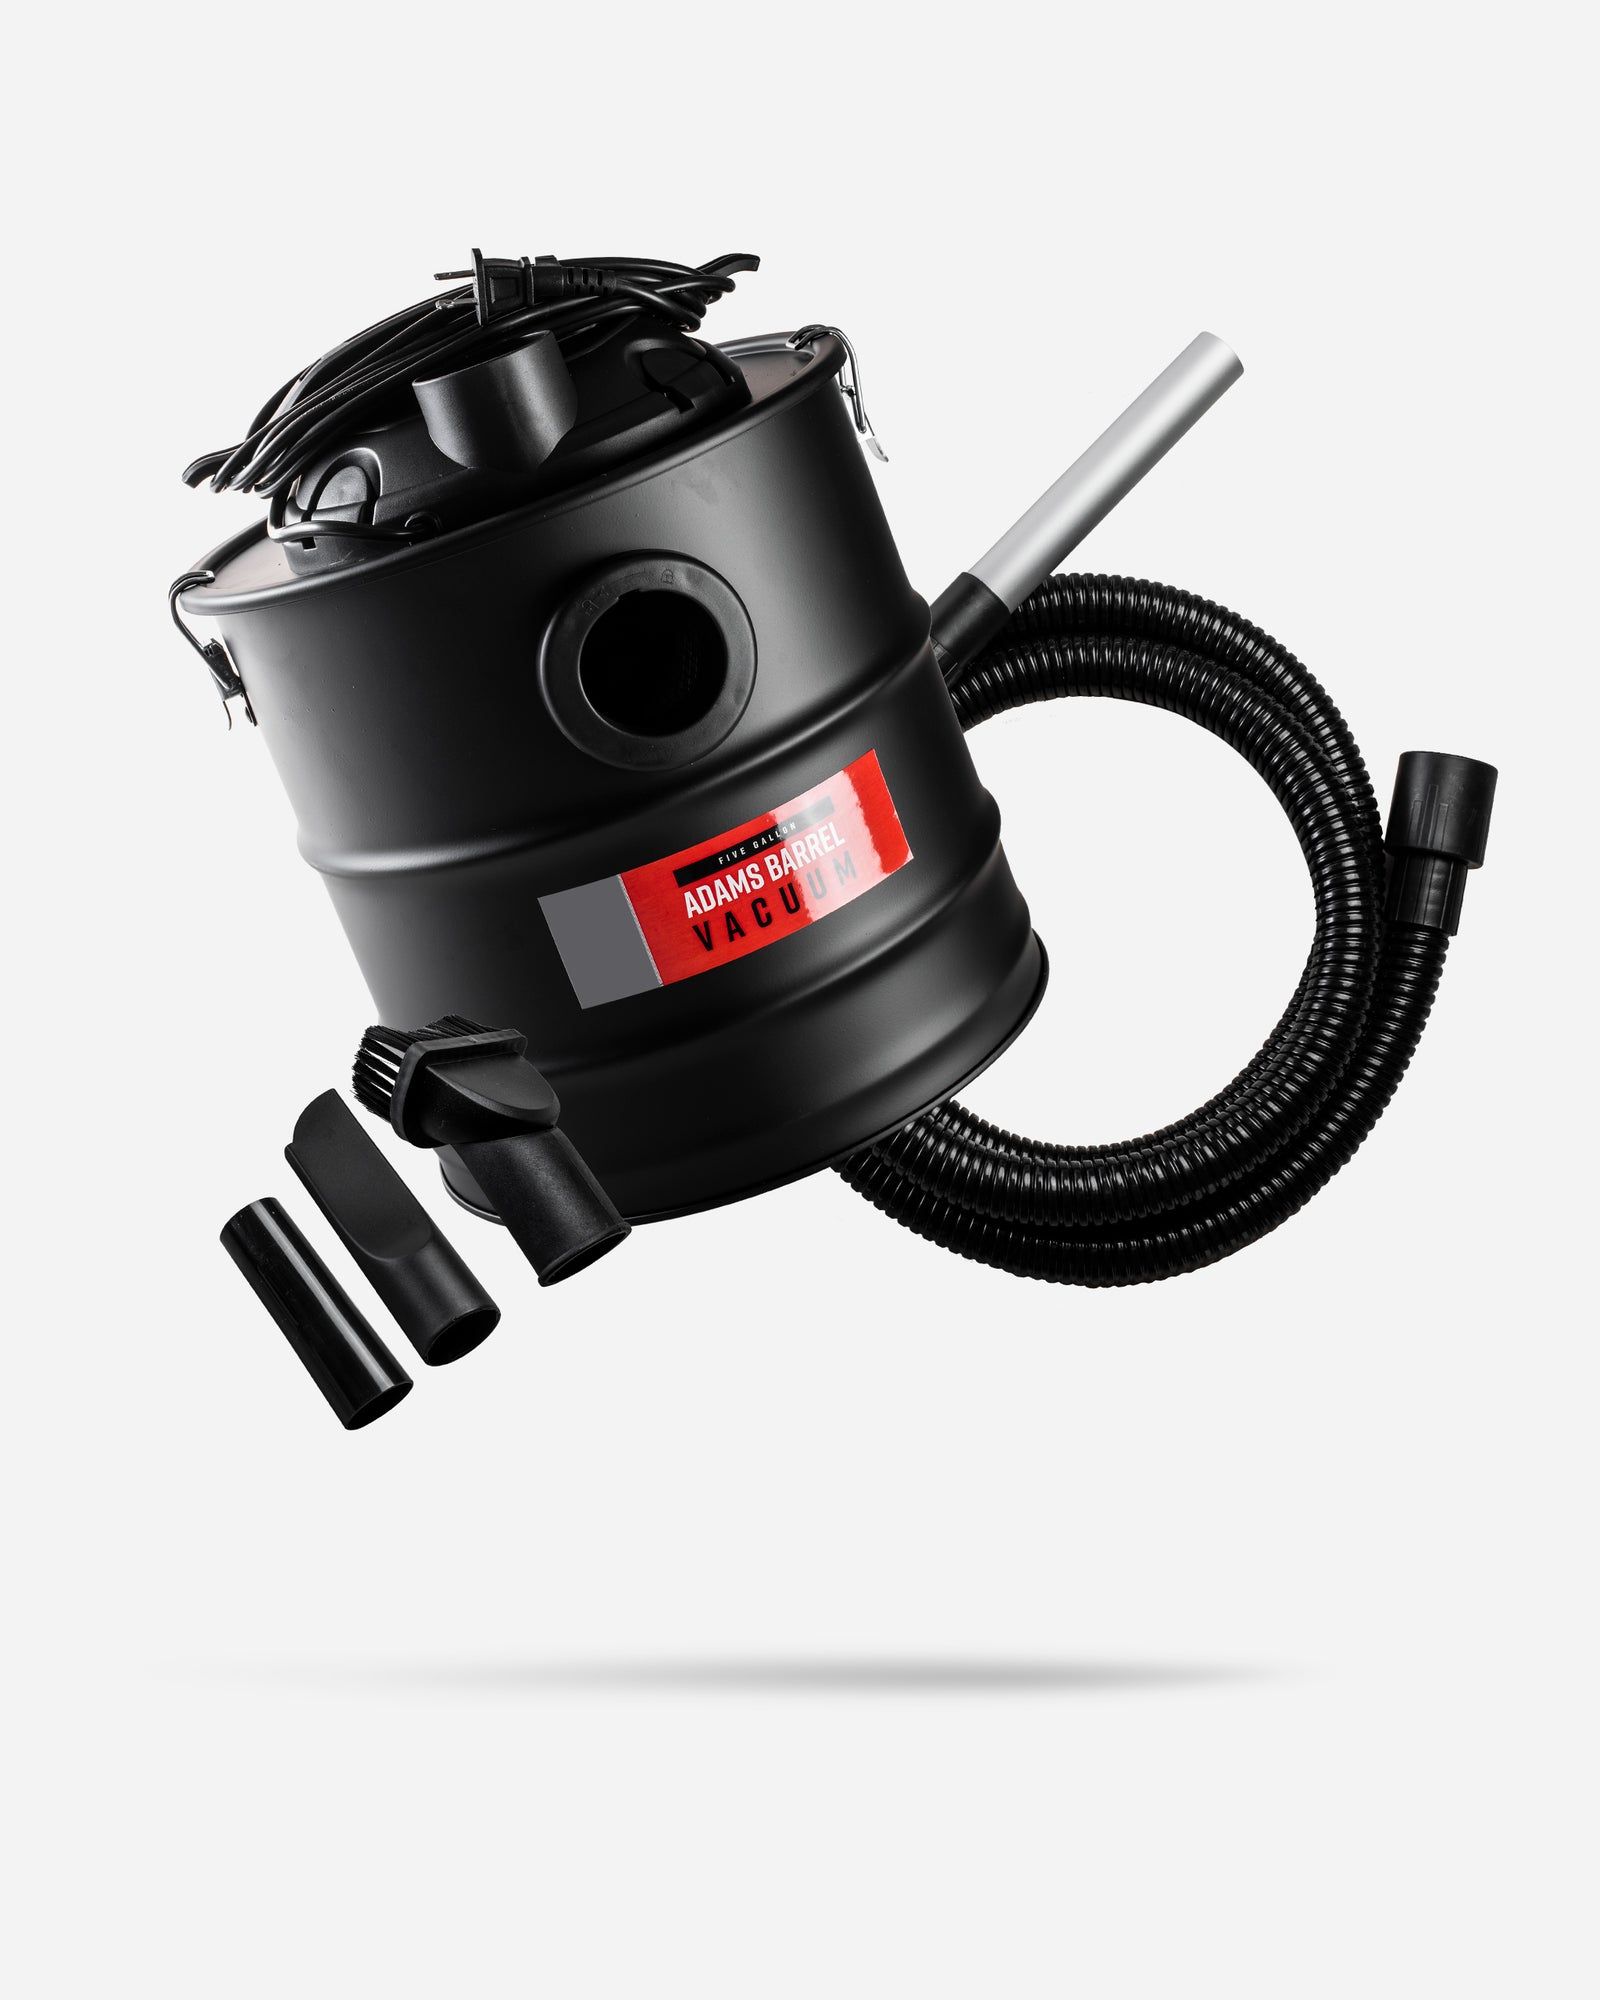 Adams Polishes Car Detailing Vacuum  Best Vacuum For Detailers - Adam's  Polishes